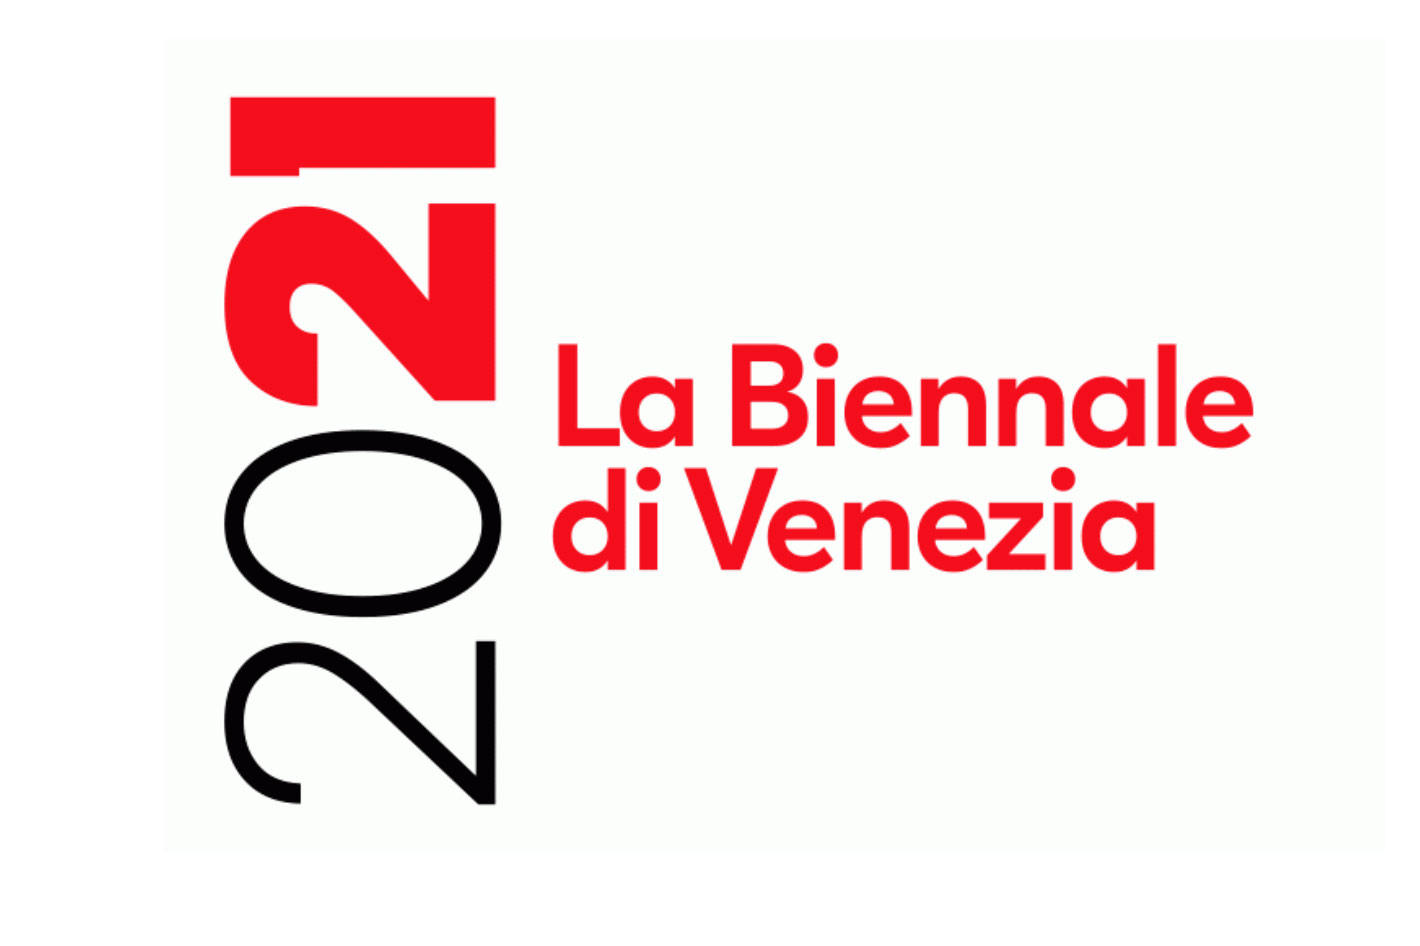 Venice International Film Festival: a call for emerging filmmakers